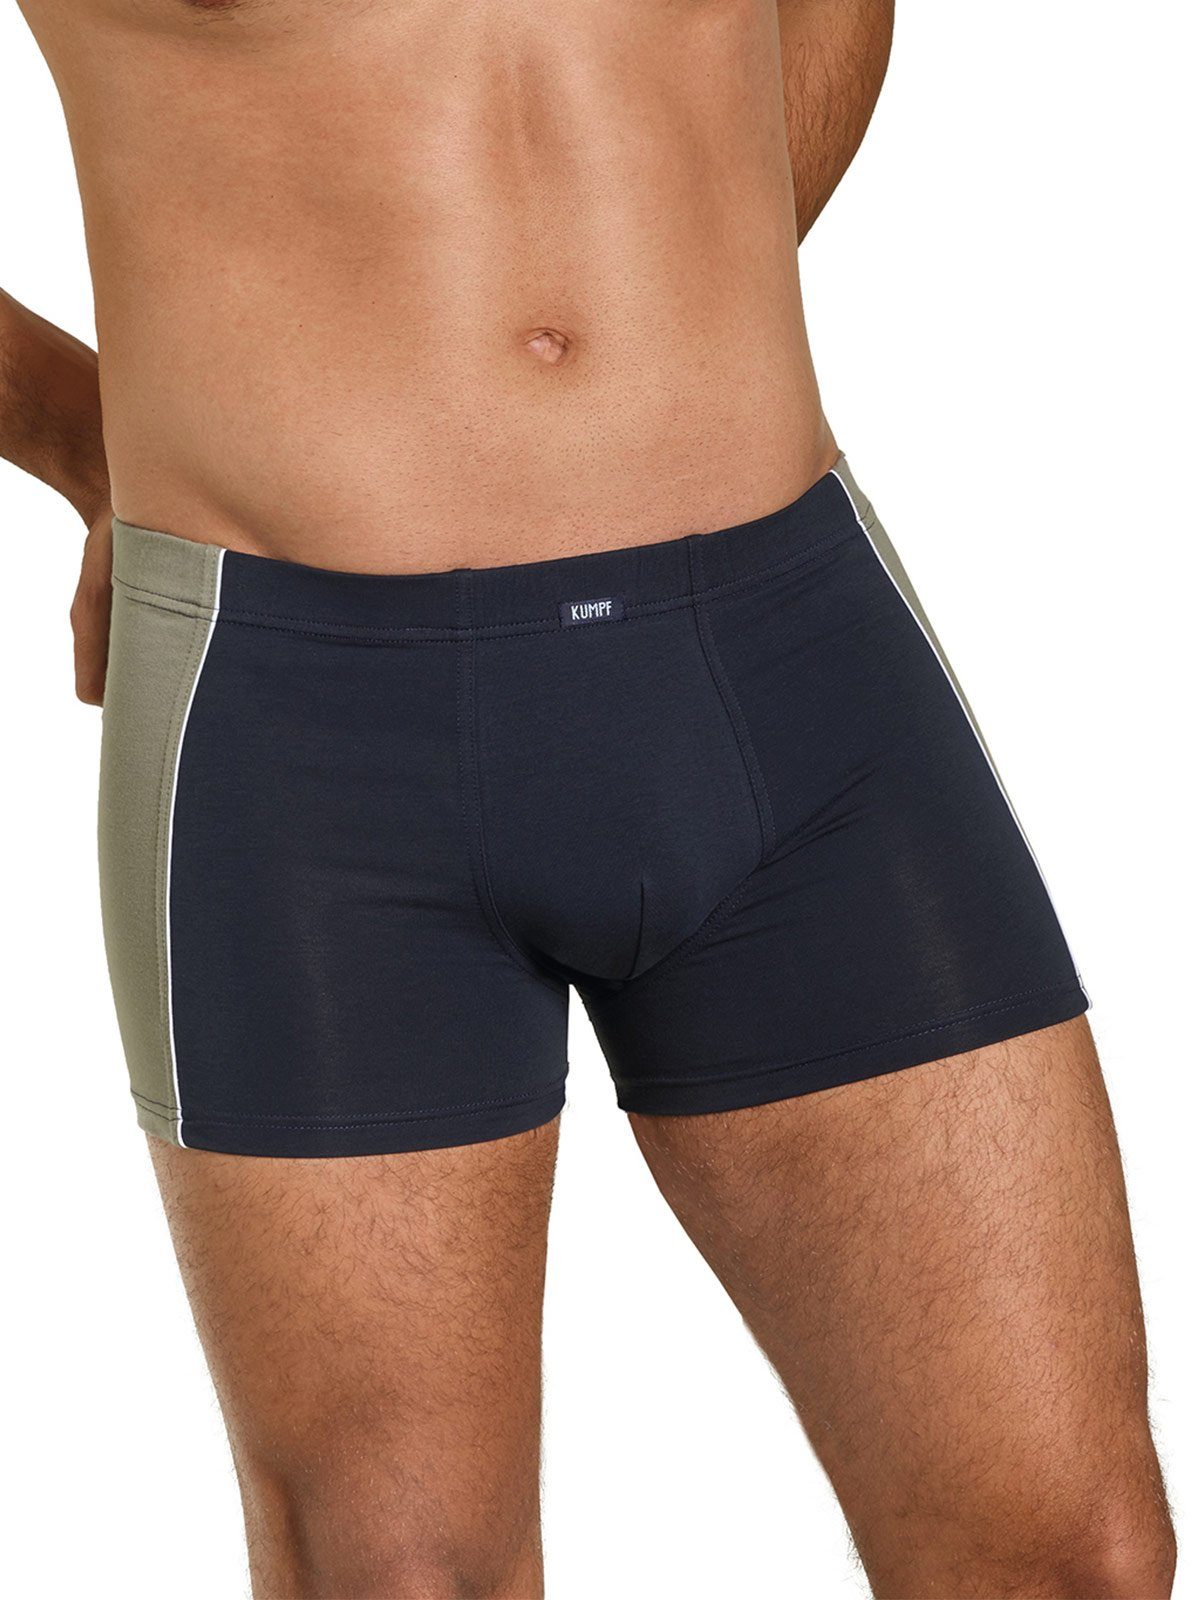 KUMPF Retro Pants Herren Pants 3er Pack Bio Cotton (Packung, 3-St) hohe Markenqualität darkblue-stahlgrau-melange | Unterhosen